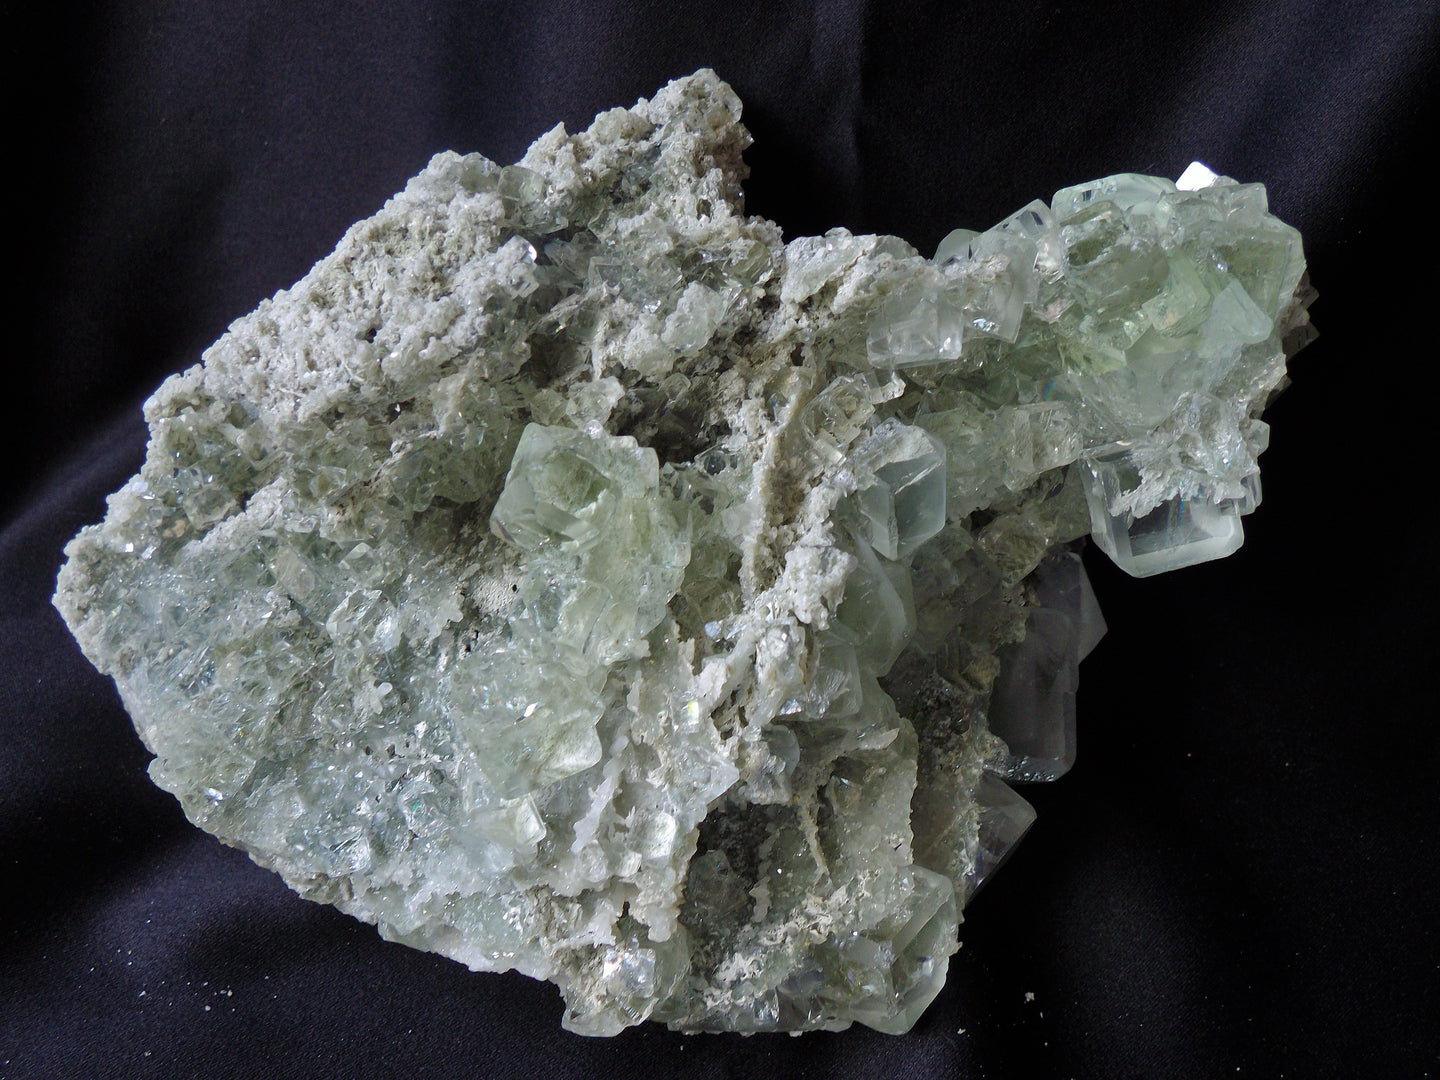 Perfect Glassy Gemmy Green Fluorite Cube Ladder Crystals Mineral Specimen FLR10182